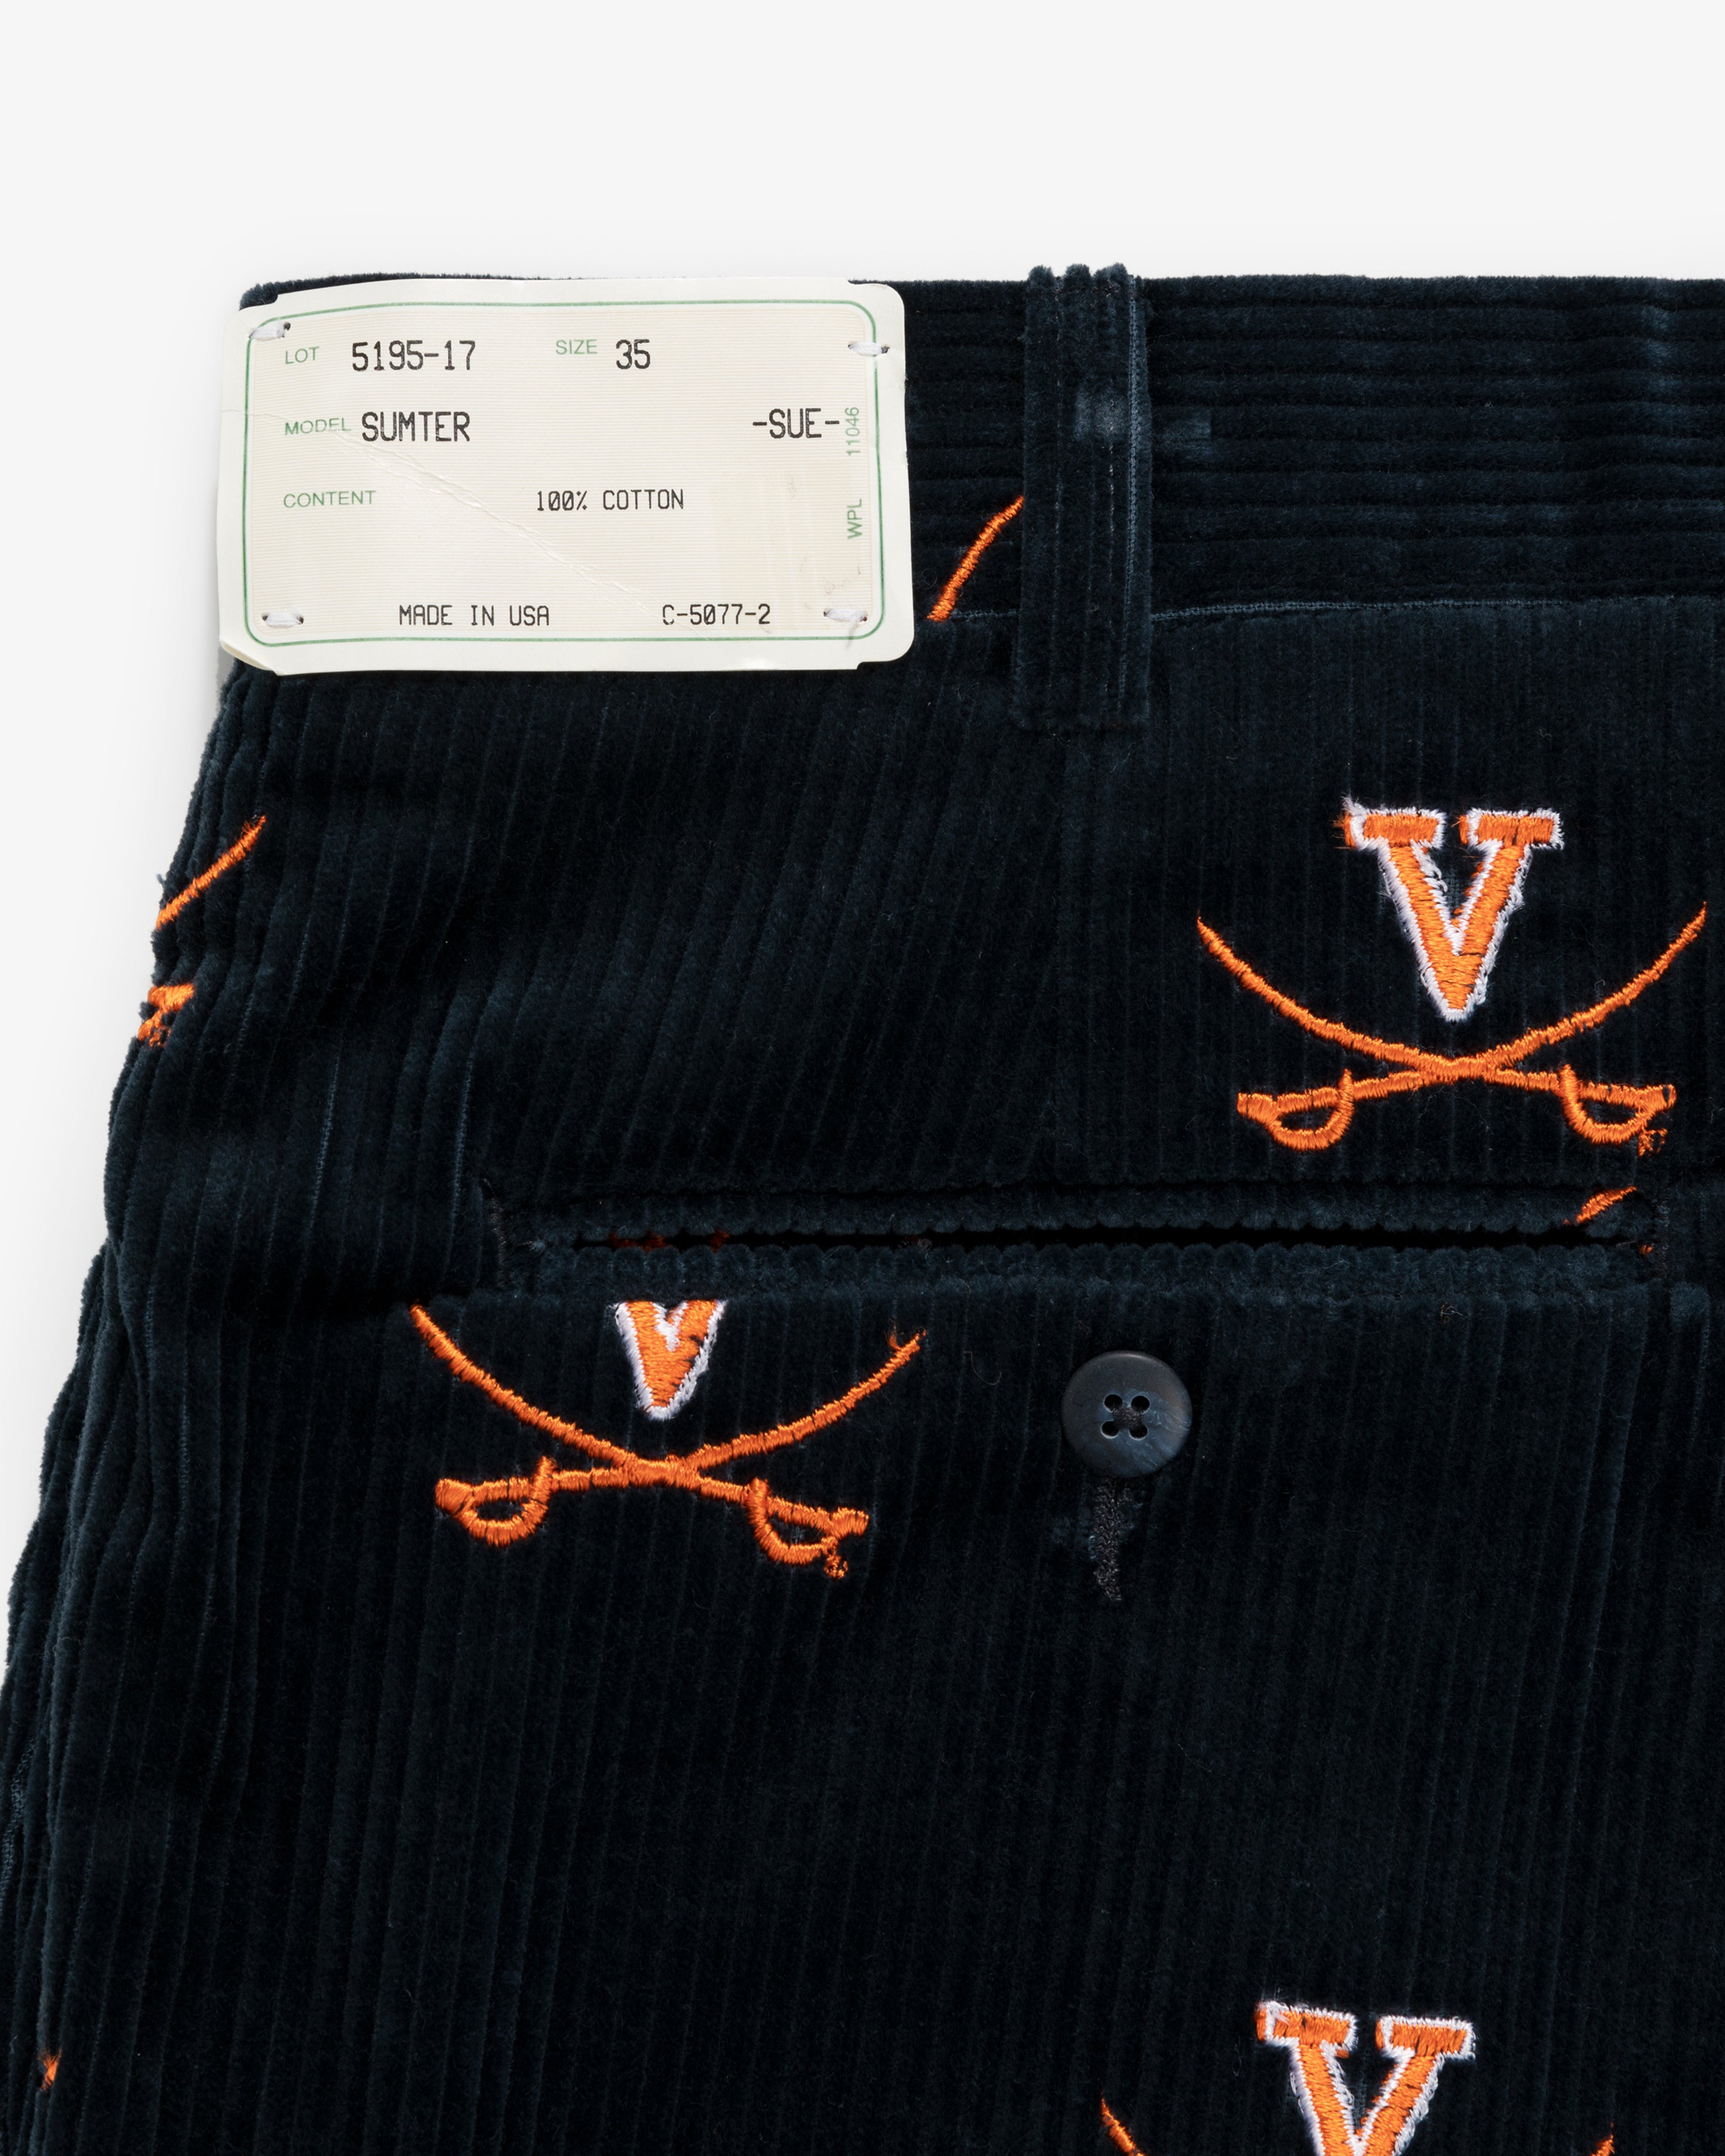 UVA Corduroy Embroidered Pants